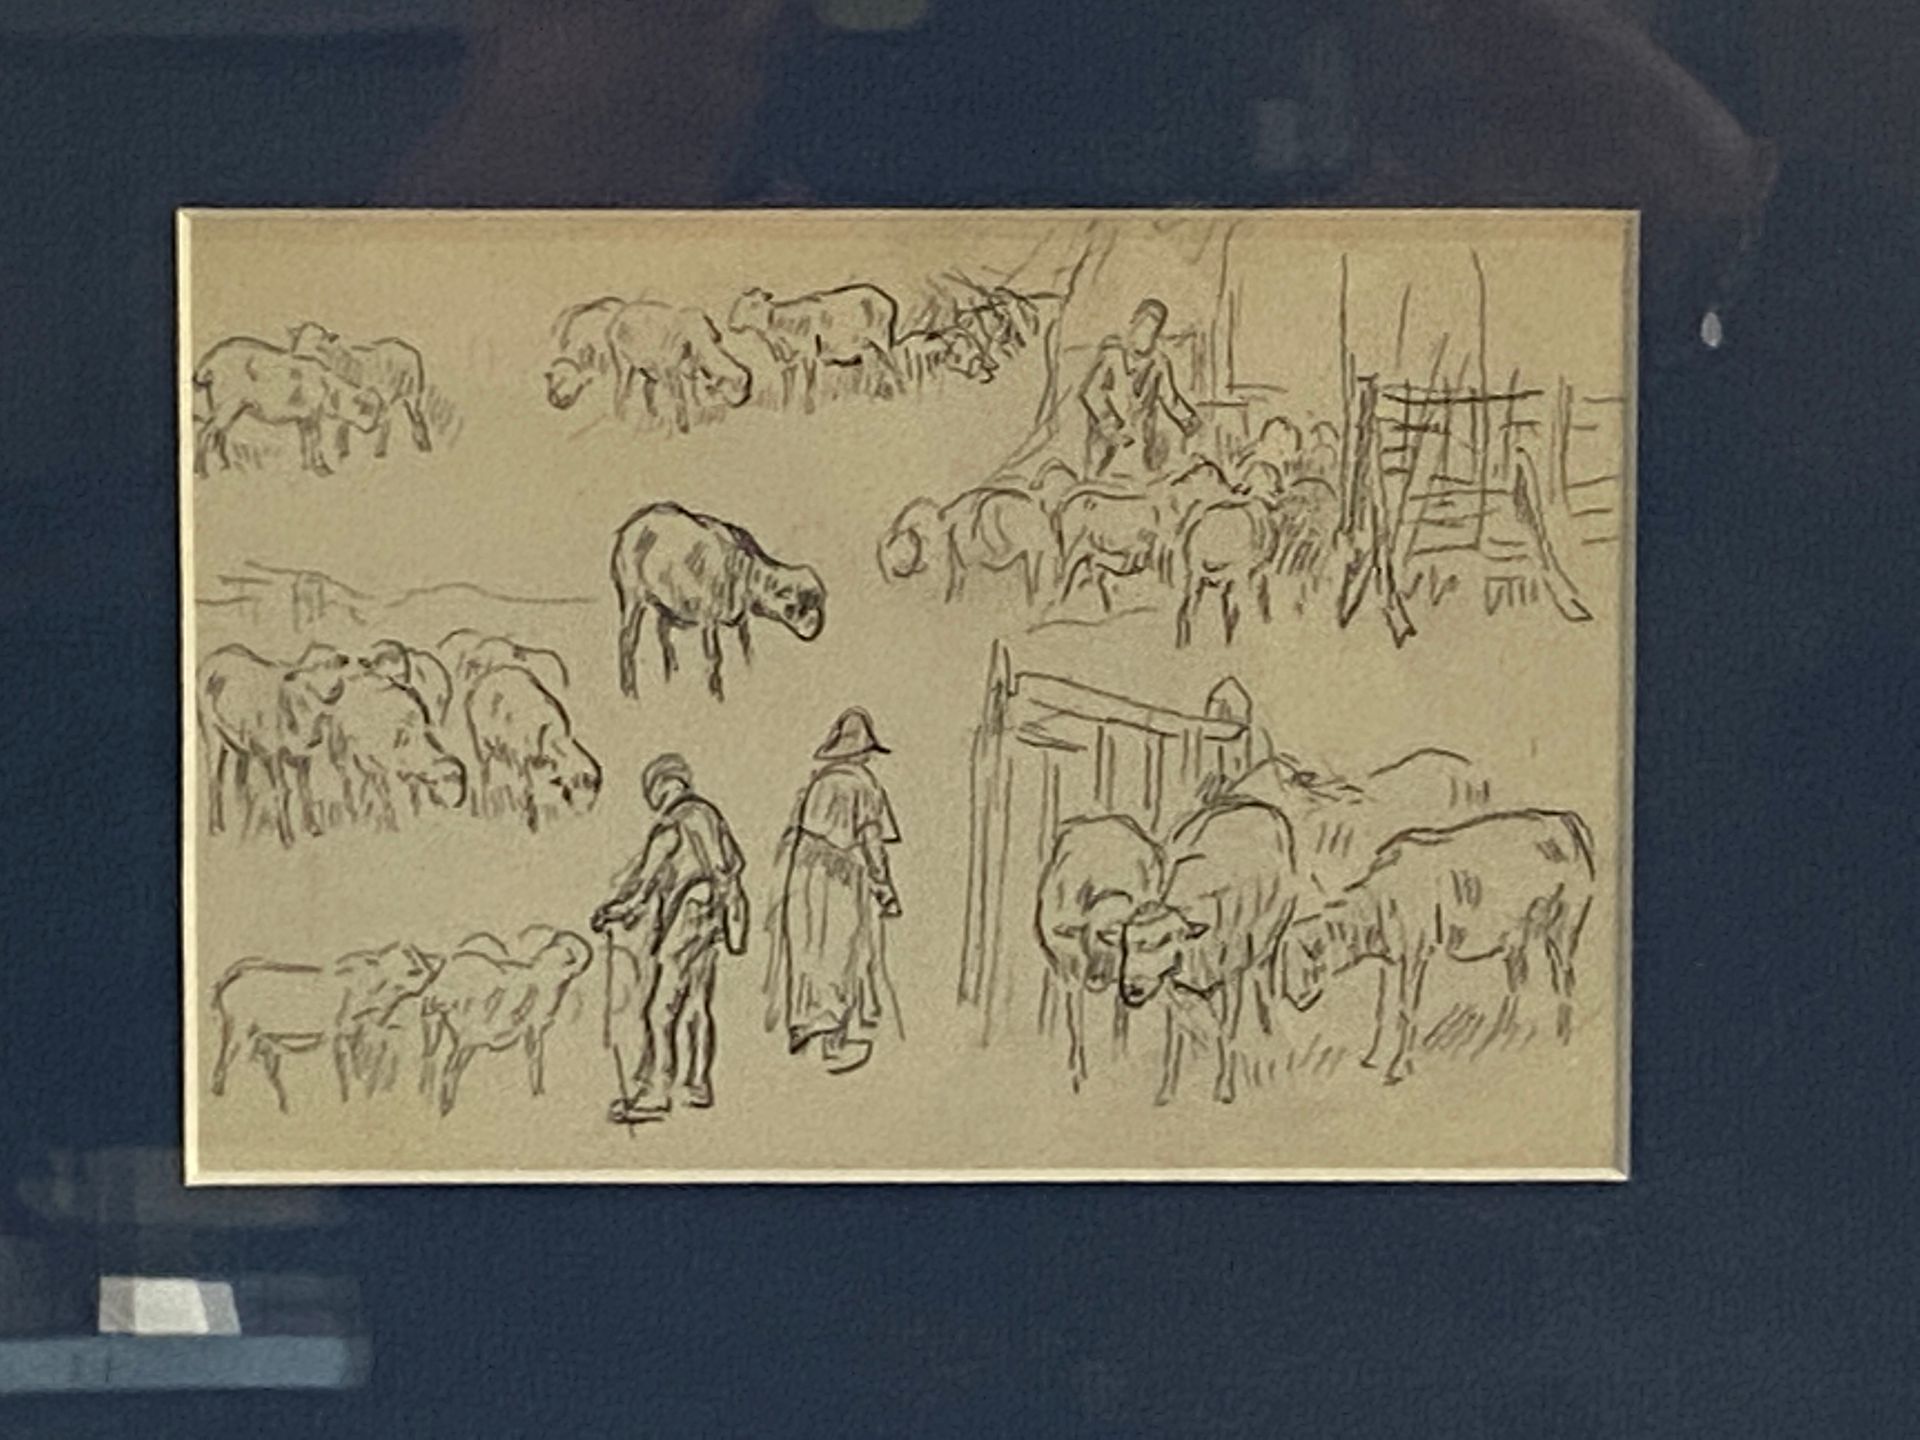 Null 布里索-德-沃维尔 (1818-1892)

绵羊和牧羊人的研究

纸上铅笔

尺寸：13 x 8厘米